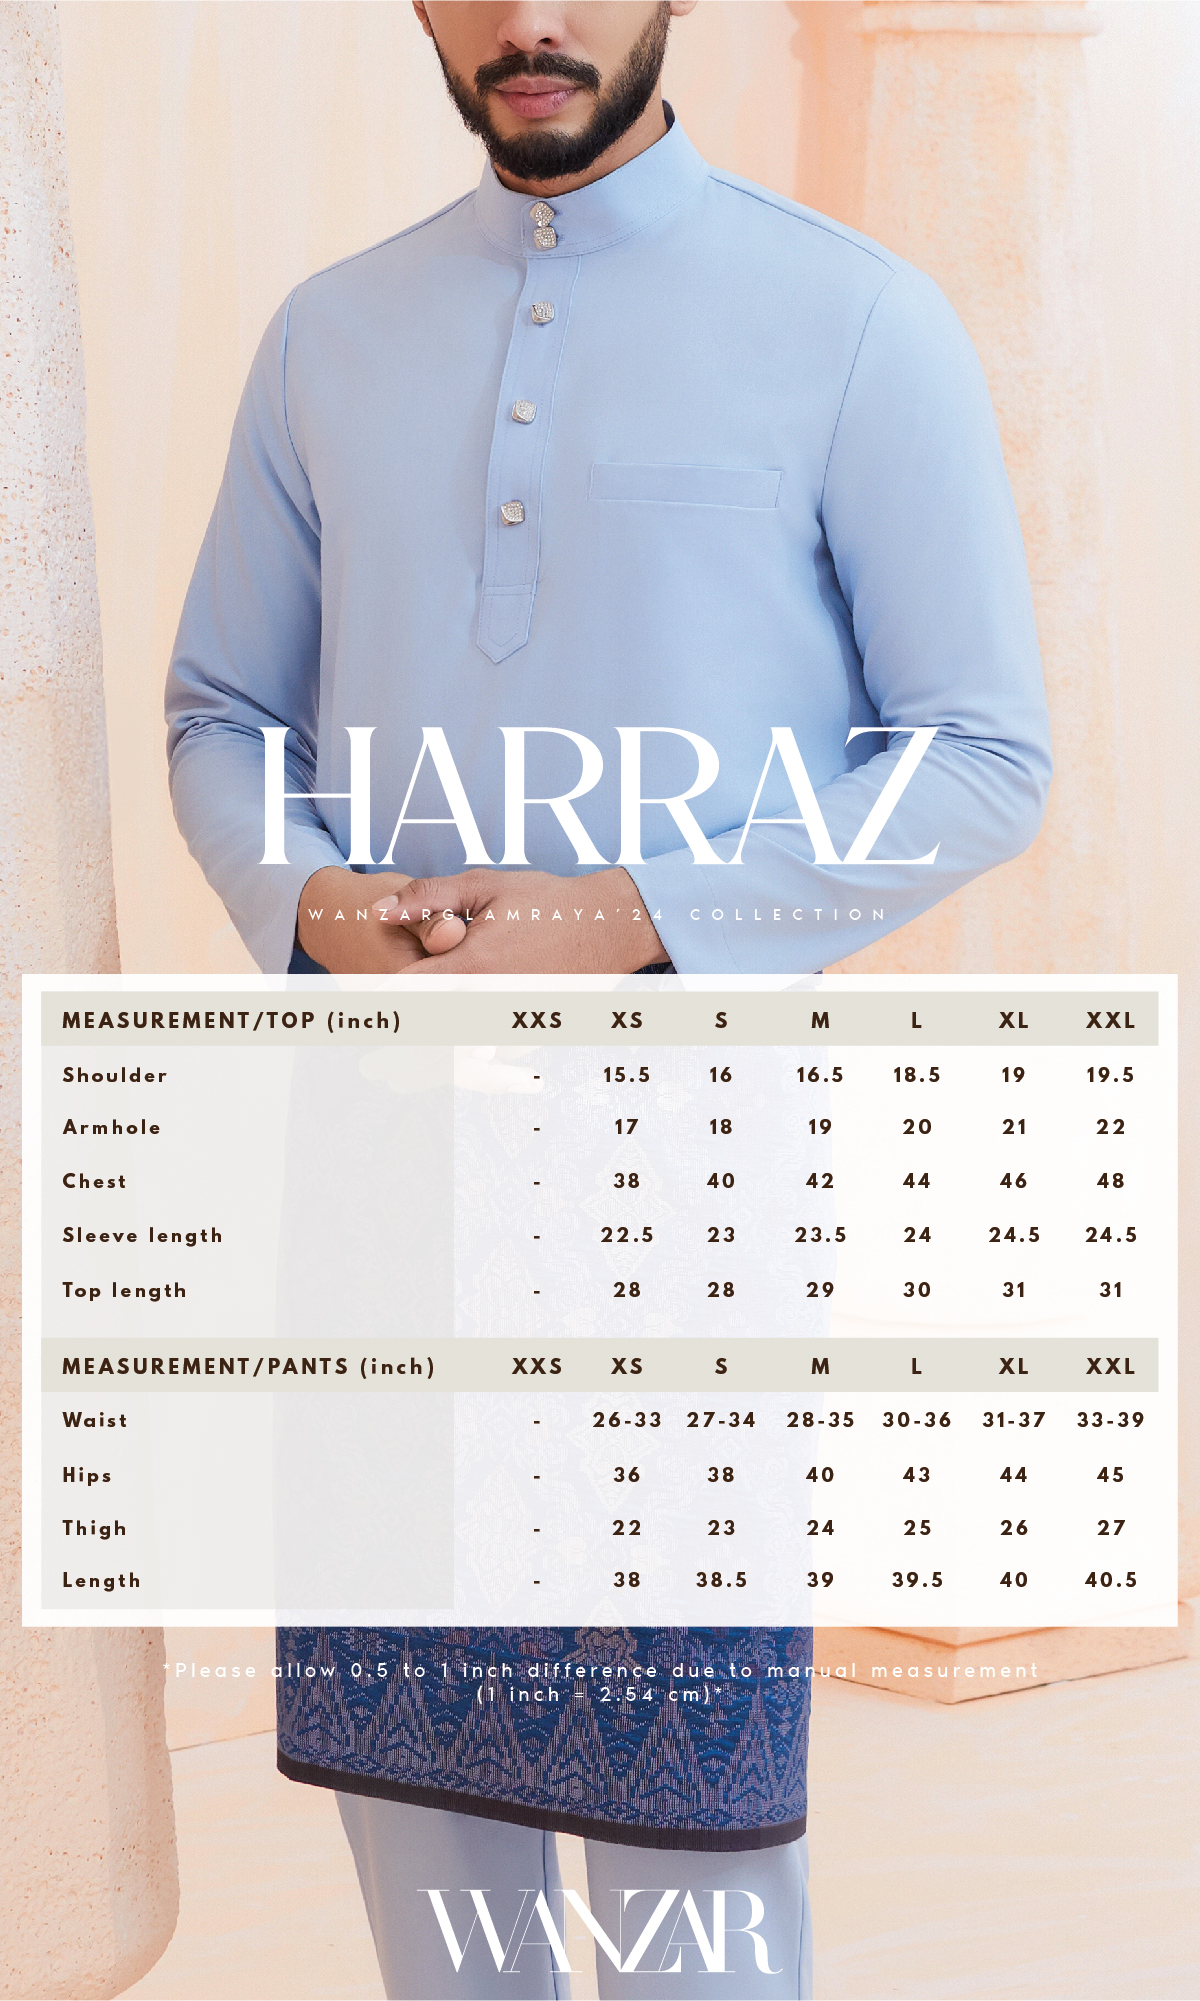 Harraz Baju Melayu in Frost White